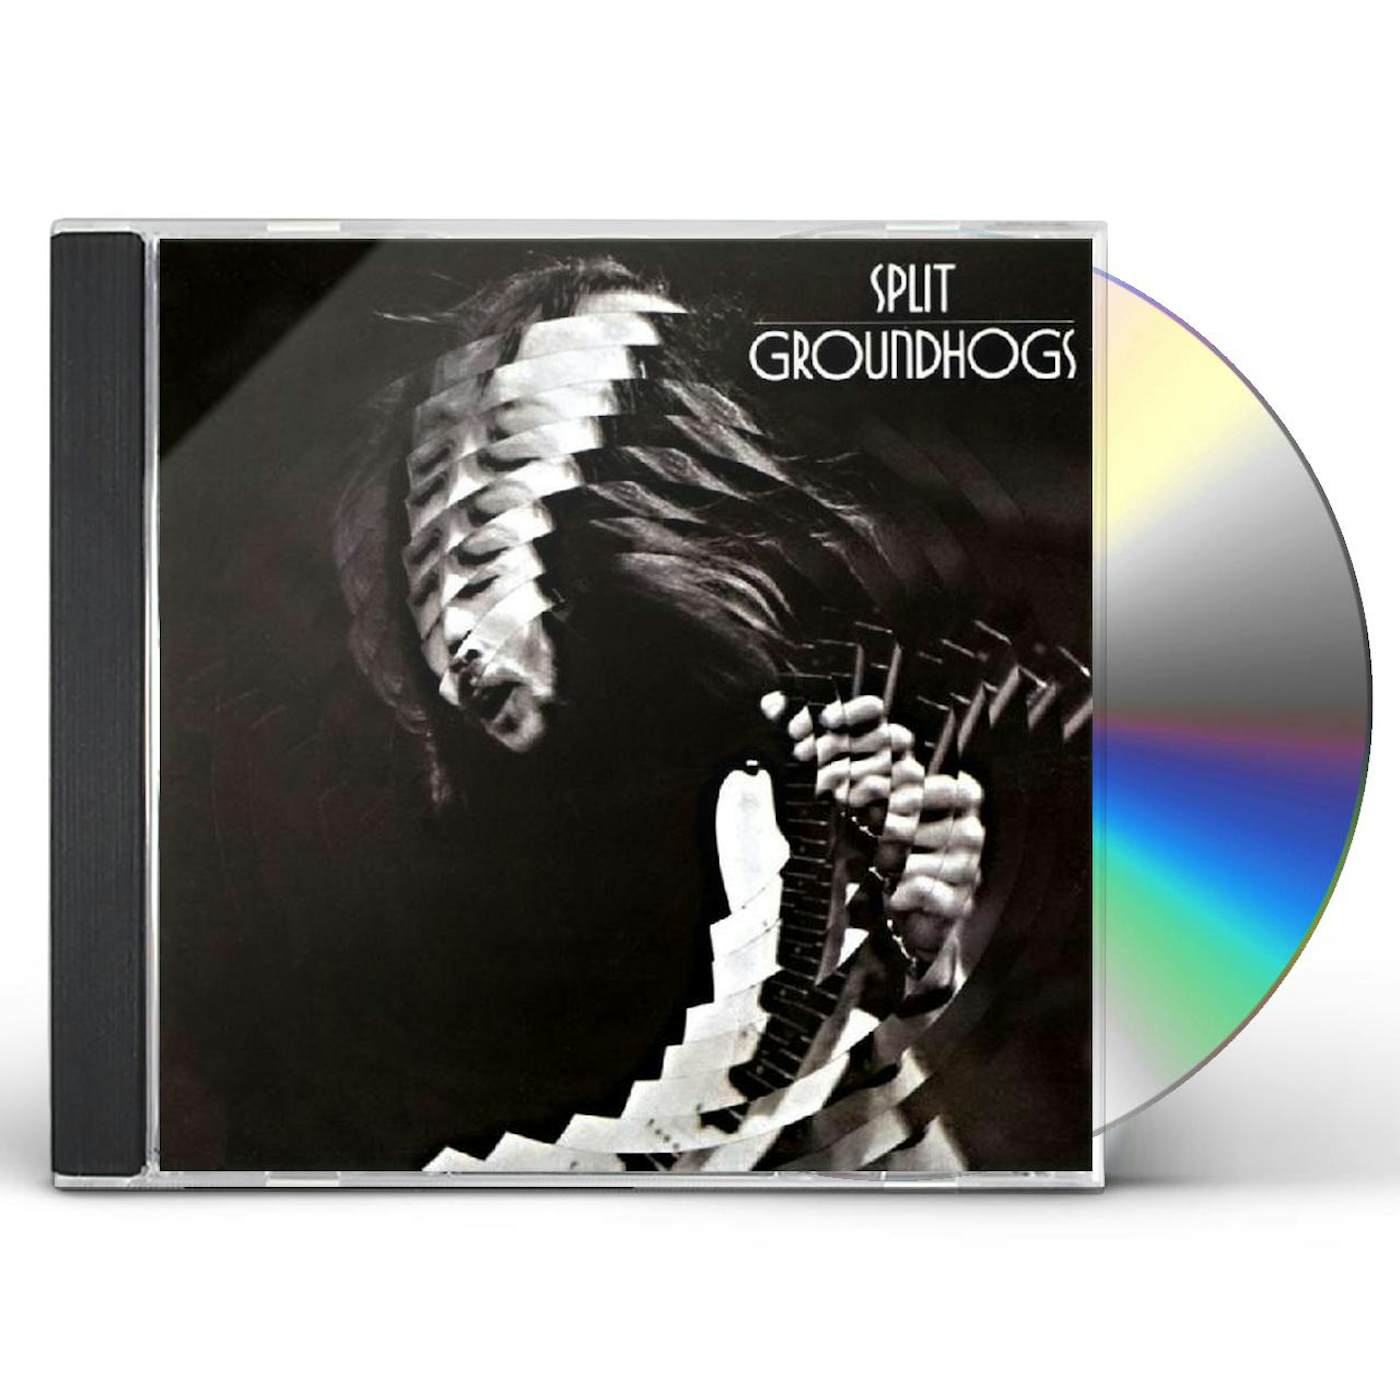 The Groundhogs SPLIT CD